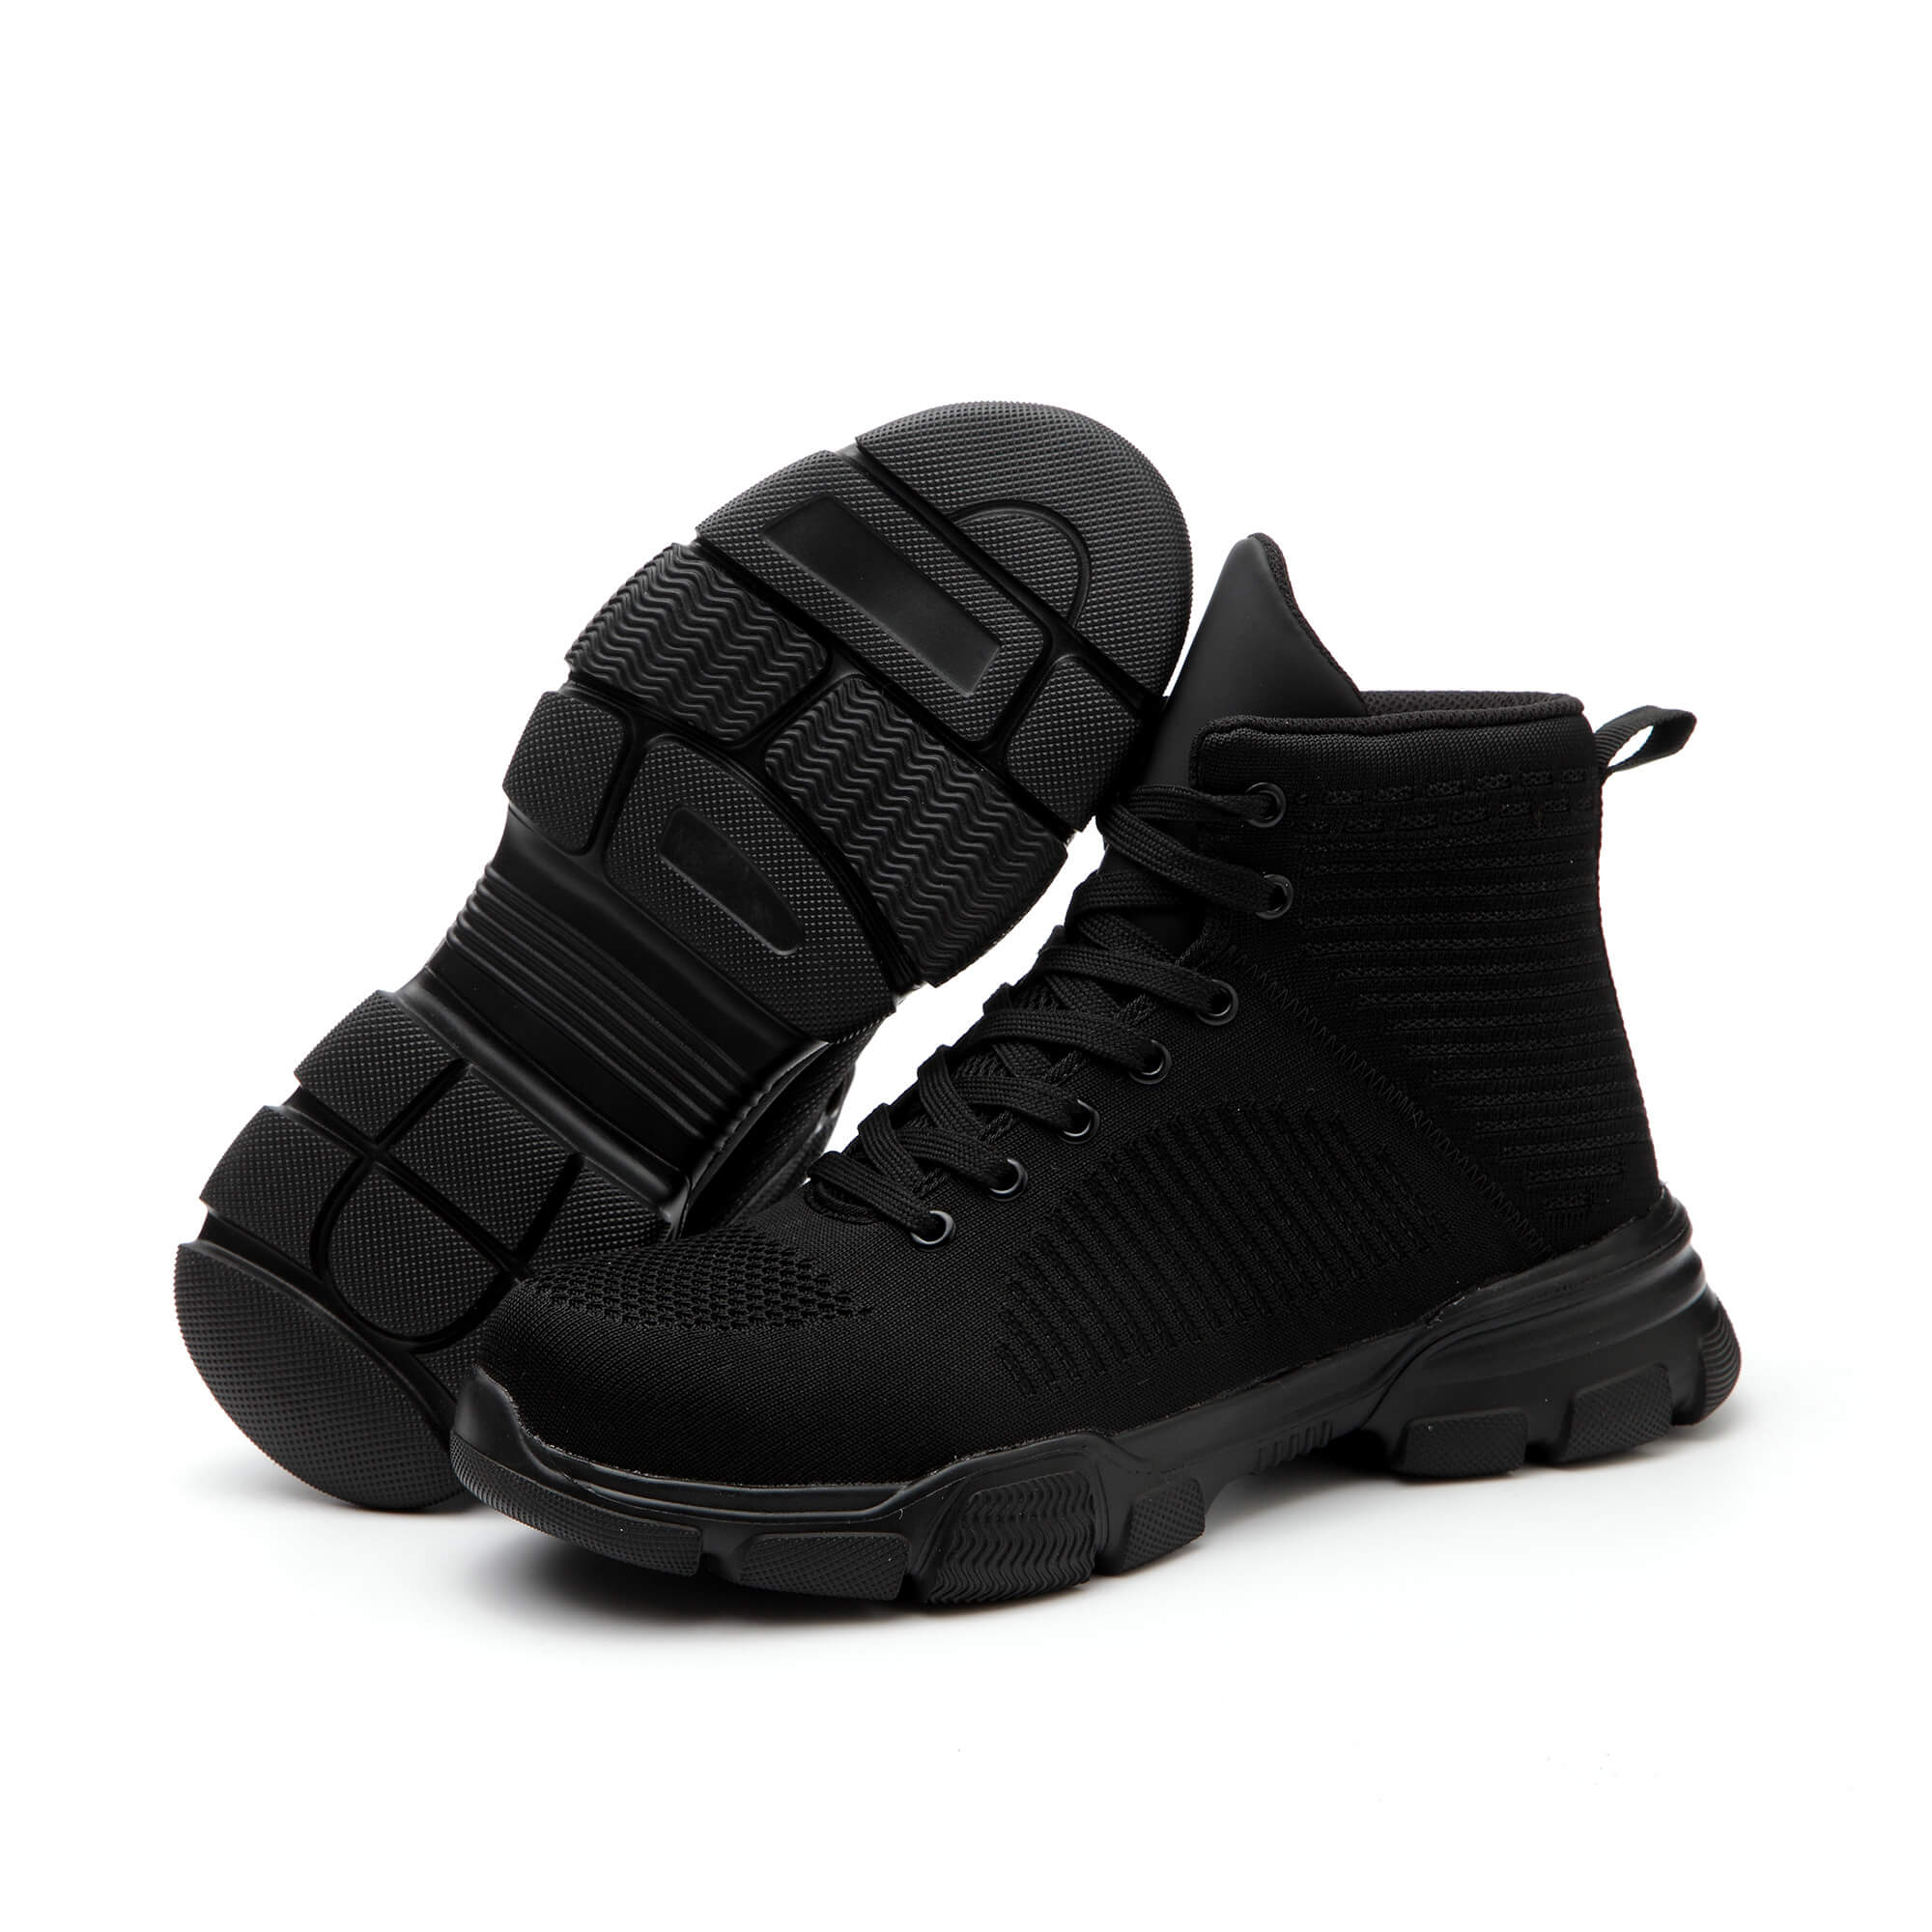 G63 Steel Toe Work Boots Black  Safety Shoes Lightweight for Men Women